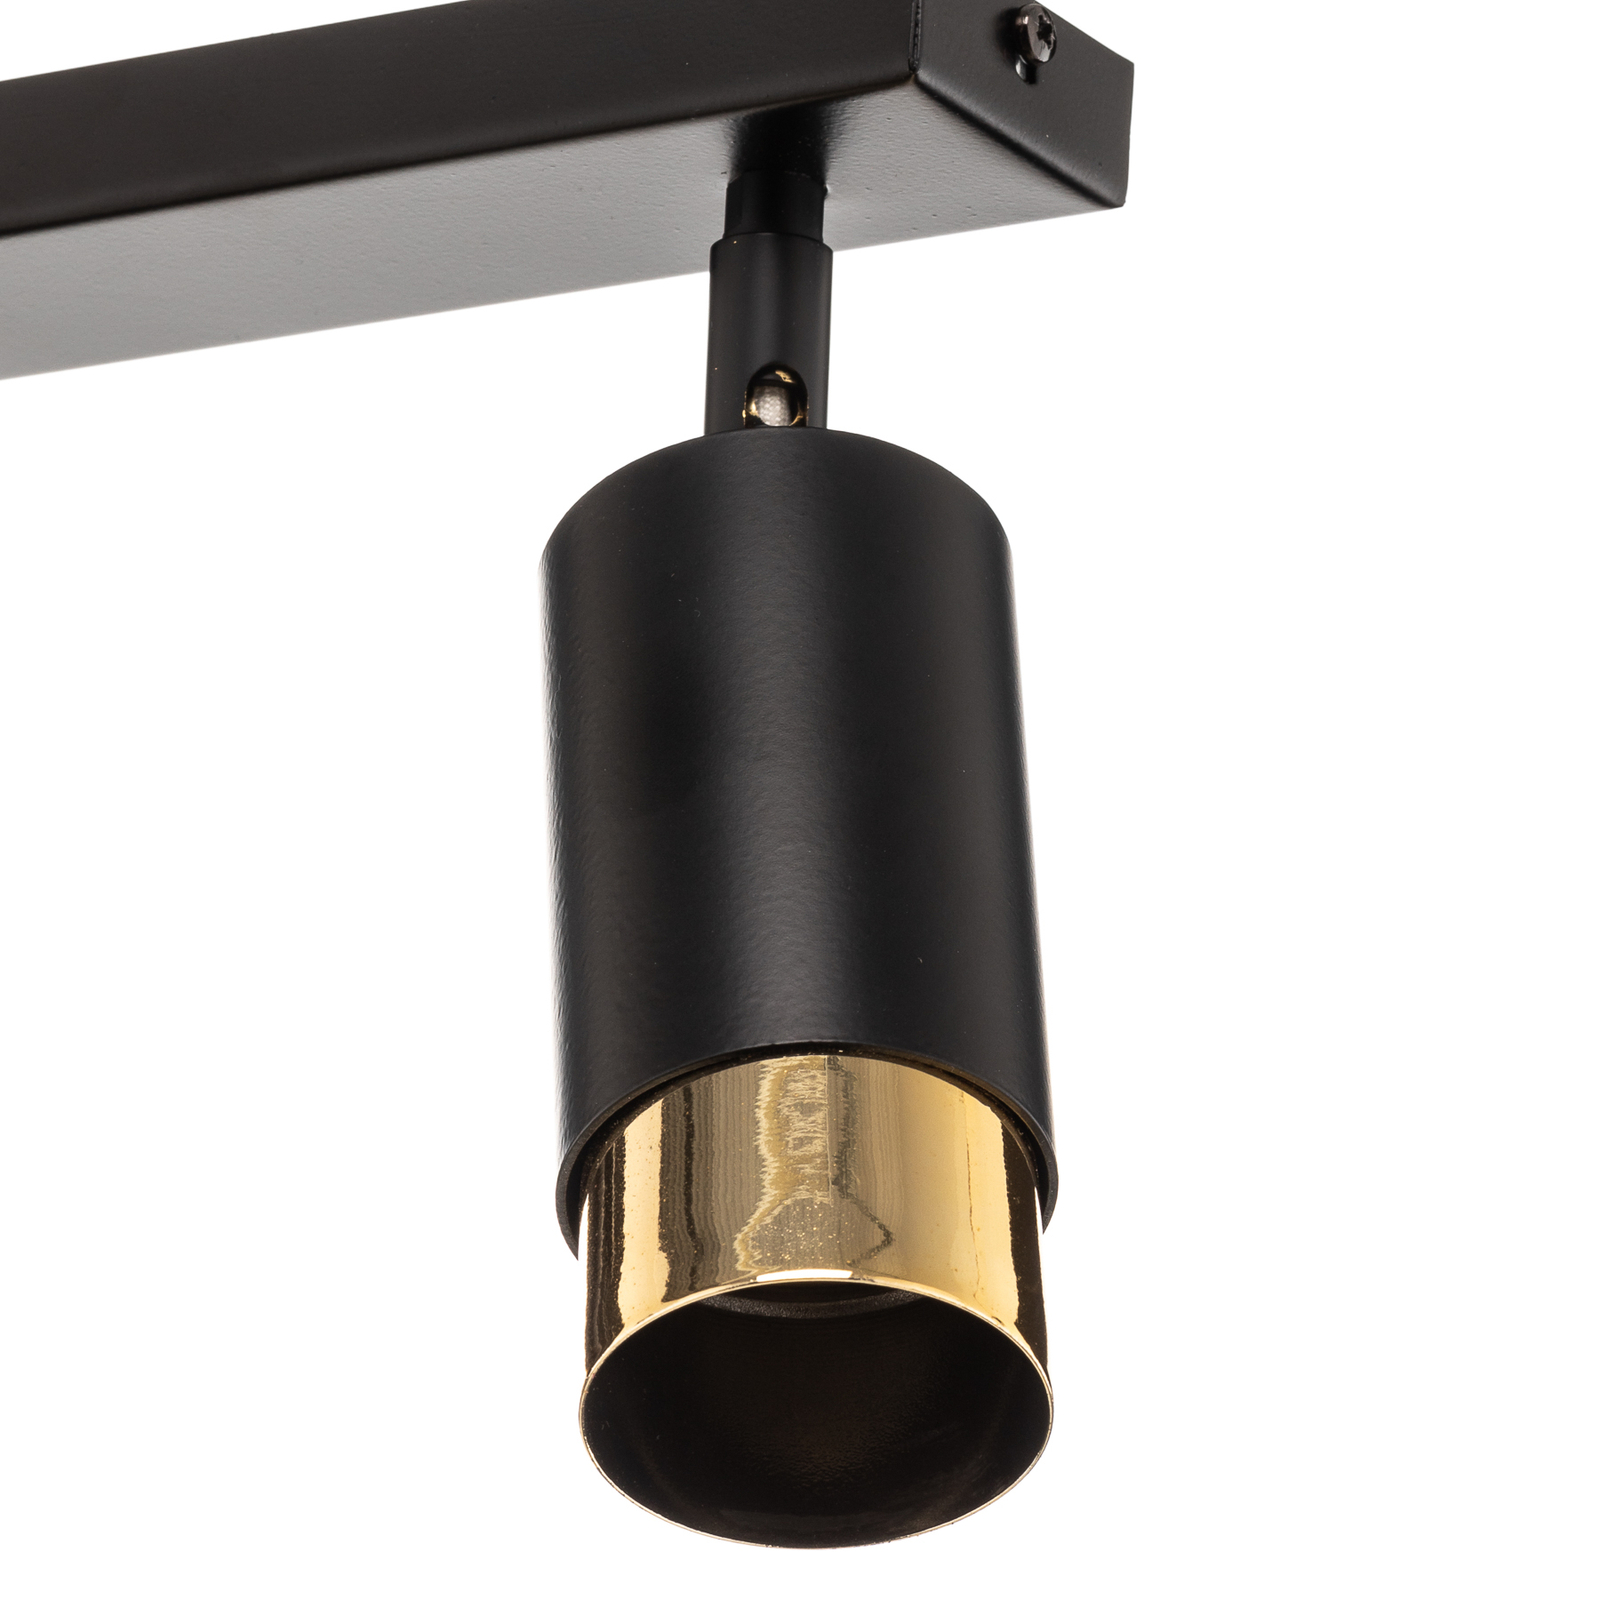 Kumo ceiling spotlight black/gold three-bulb